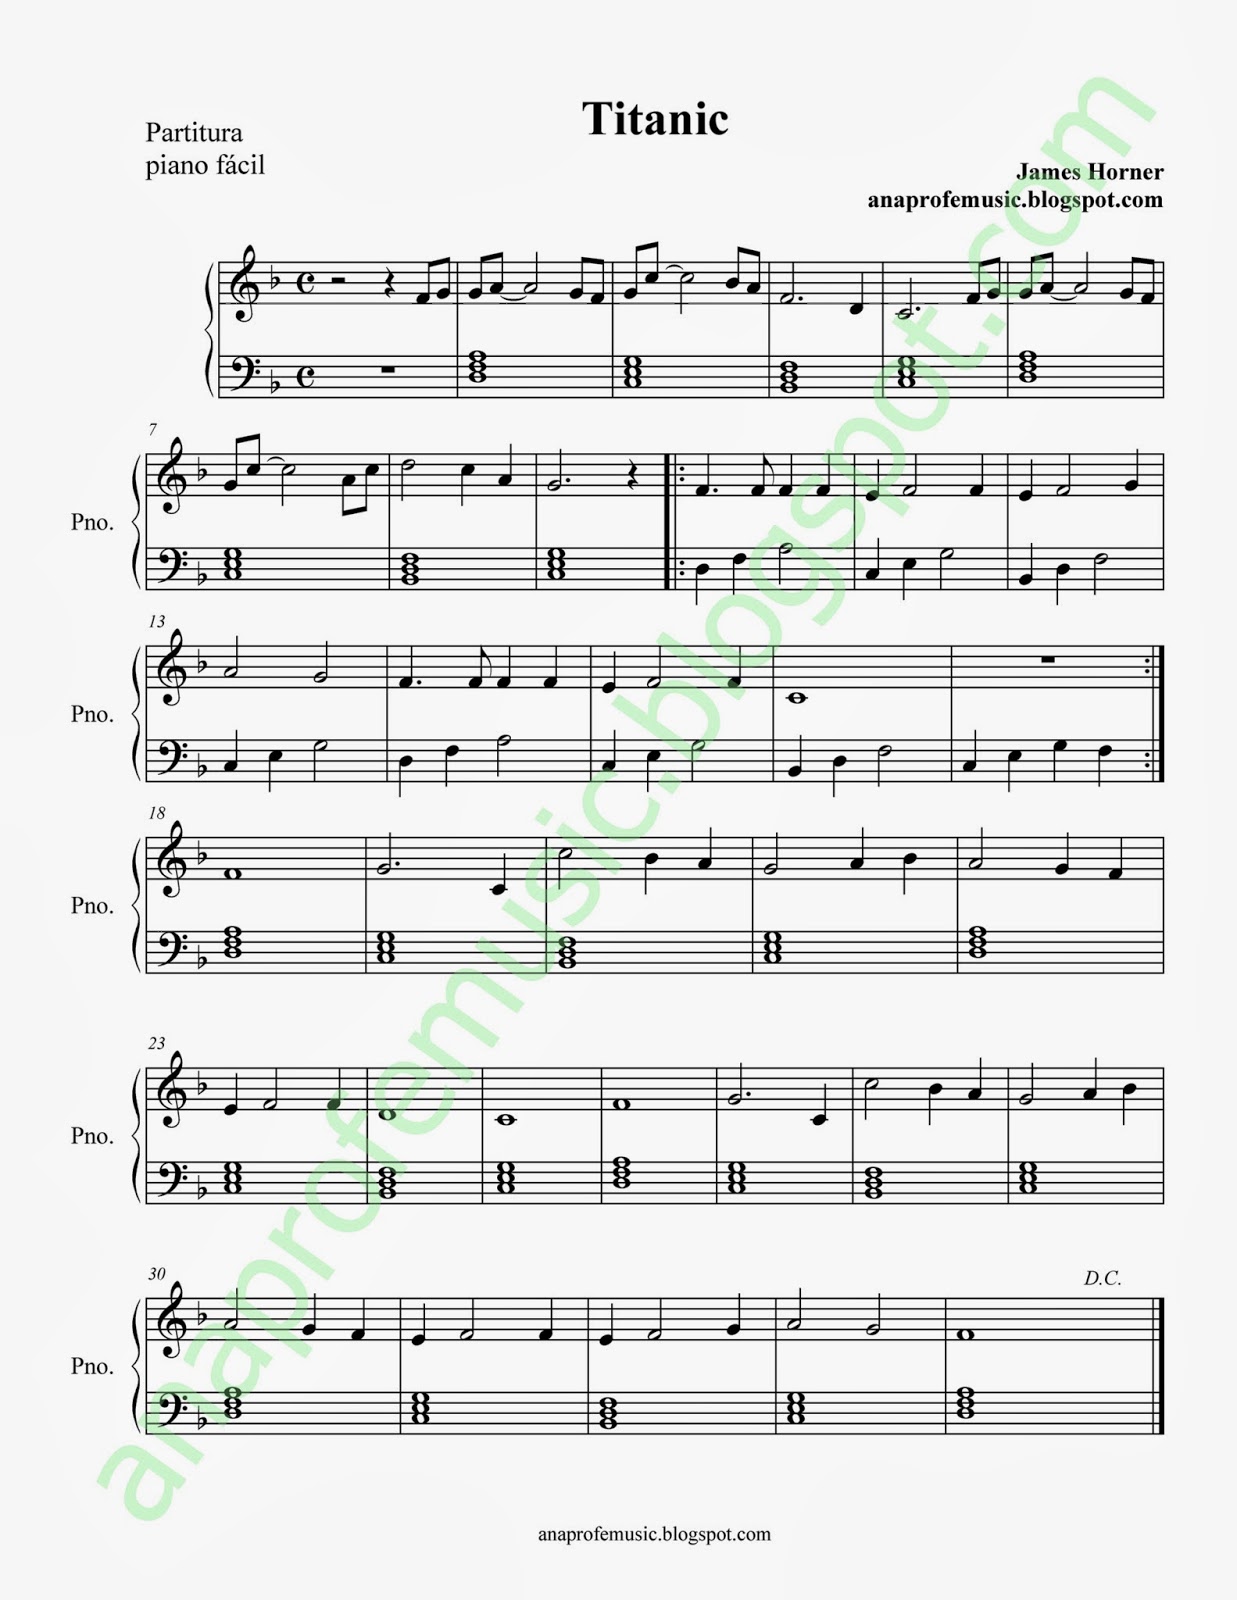 Folleto autómata Noveno AnaProfeMusic: Partitura BSO Titanic para piano - fácil -